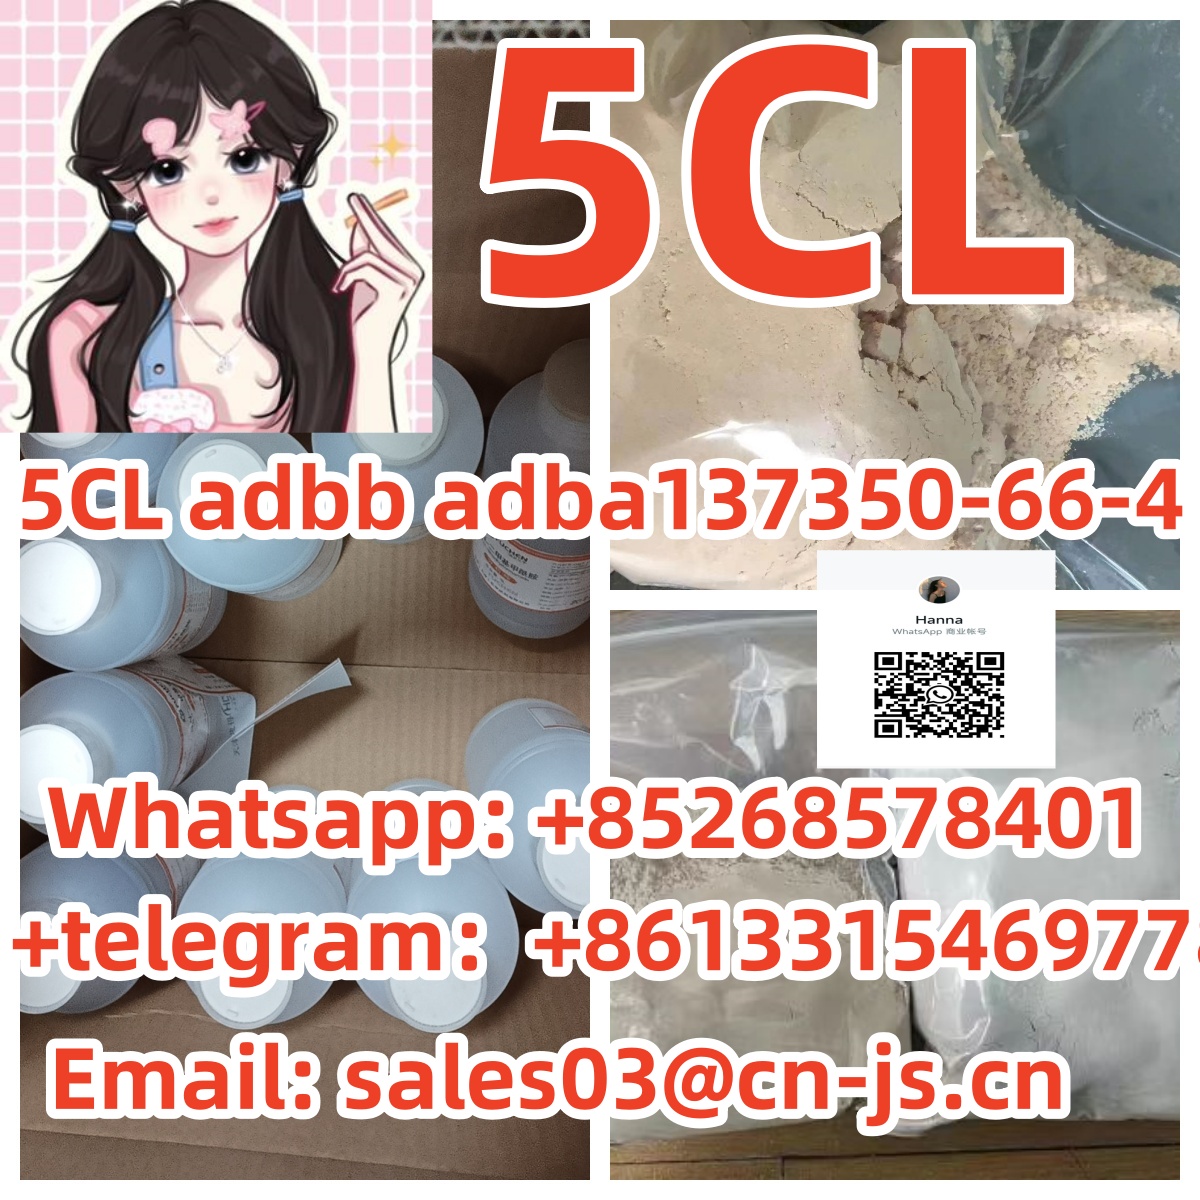 Hot Selling 5CL adbb adba137350-66-4,1,Pets,Dogs,77traders